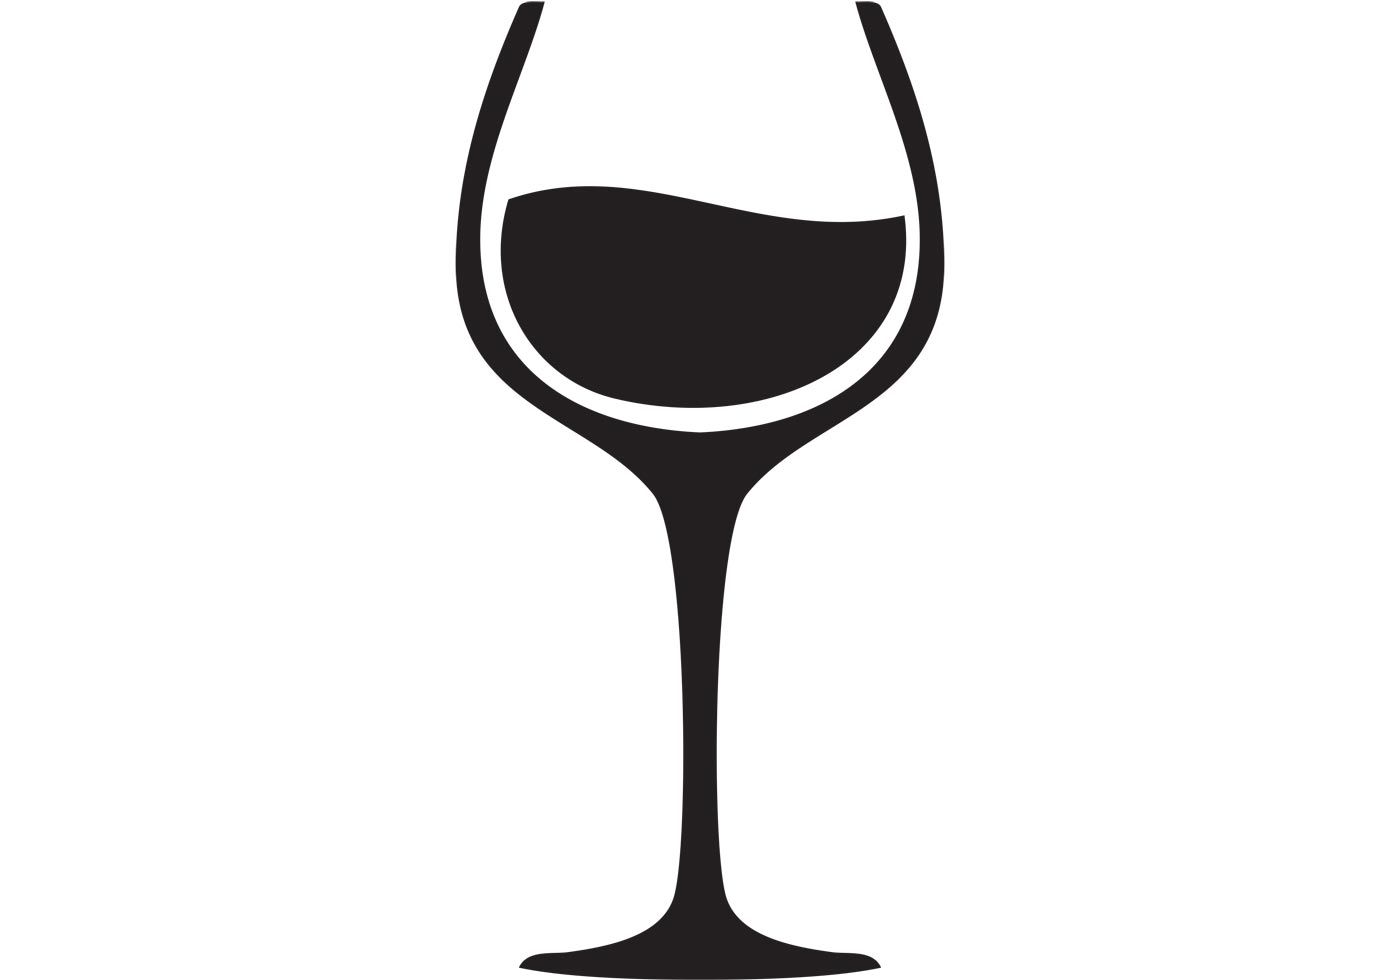 Stemware,Wine glass,Champagne stemware,Drinkware,Glass,Tableware,Barware,Snifter,Wine,Dessert wine,Red wine,Drink,Alcohol,Wine bottle,White wine,Black-and-white,Wine cocktail,Sherry,Clip art,Burgundy wine